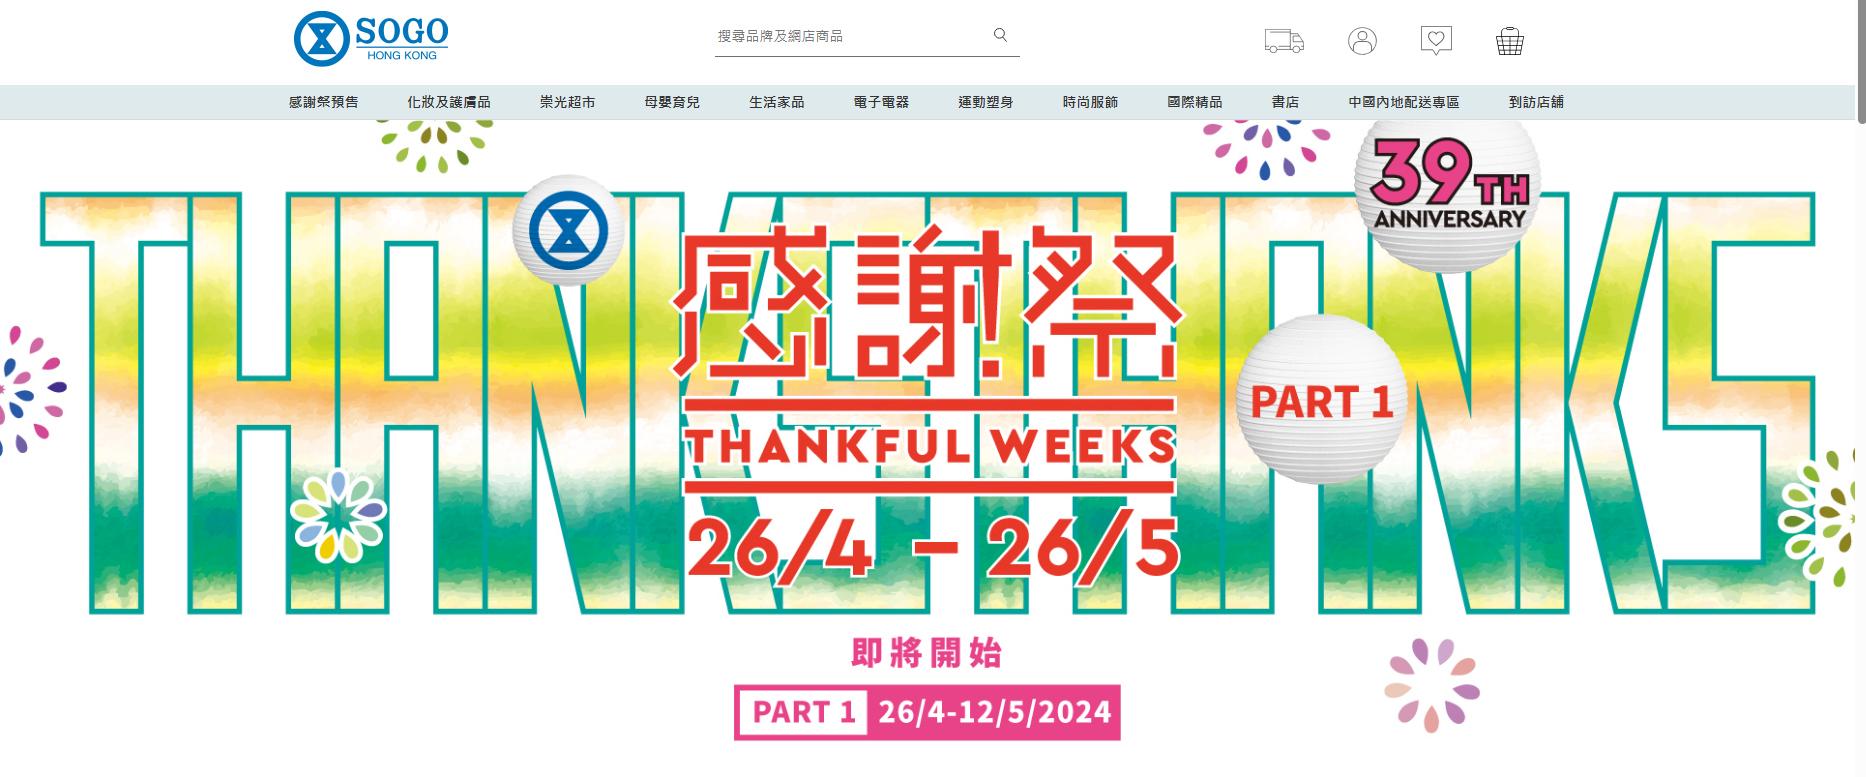 SOGO Thankful Week 2024崇光感謝祭　4月26日開鑼　eStore預購可獲折扣